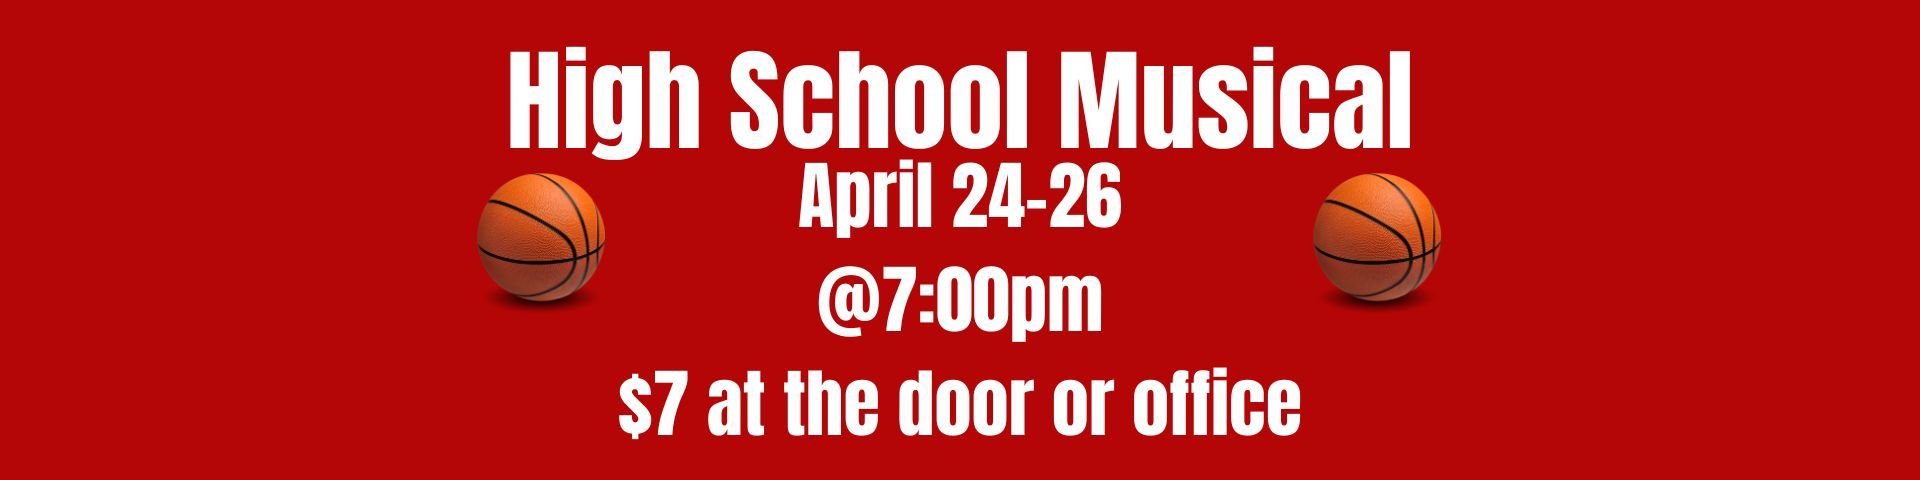 High School Musical April 24-26